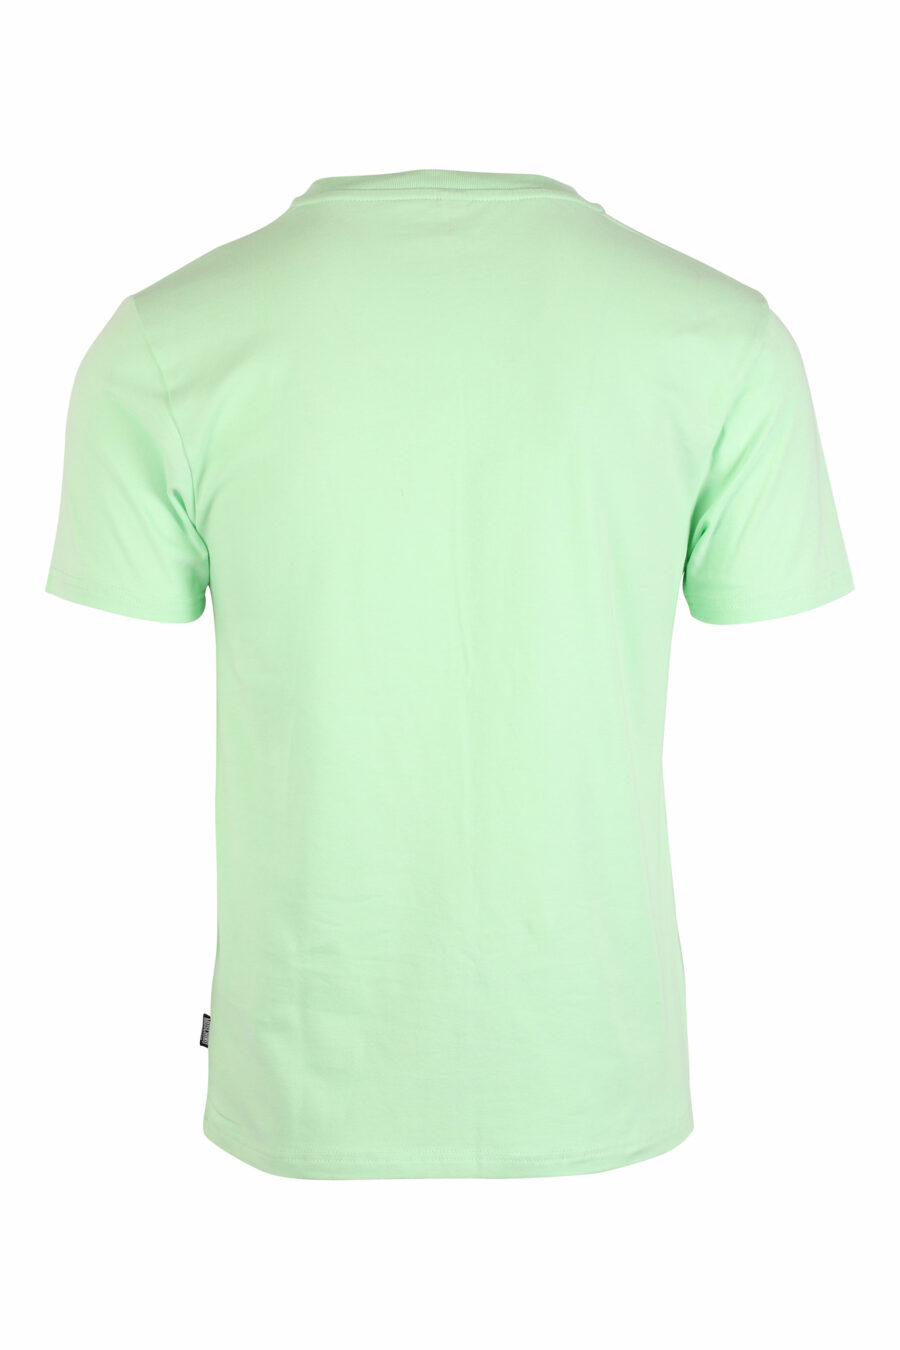 Camiseta verde menta slim fit con logo oso underbear - IMG 1385